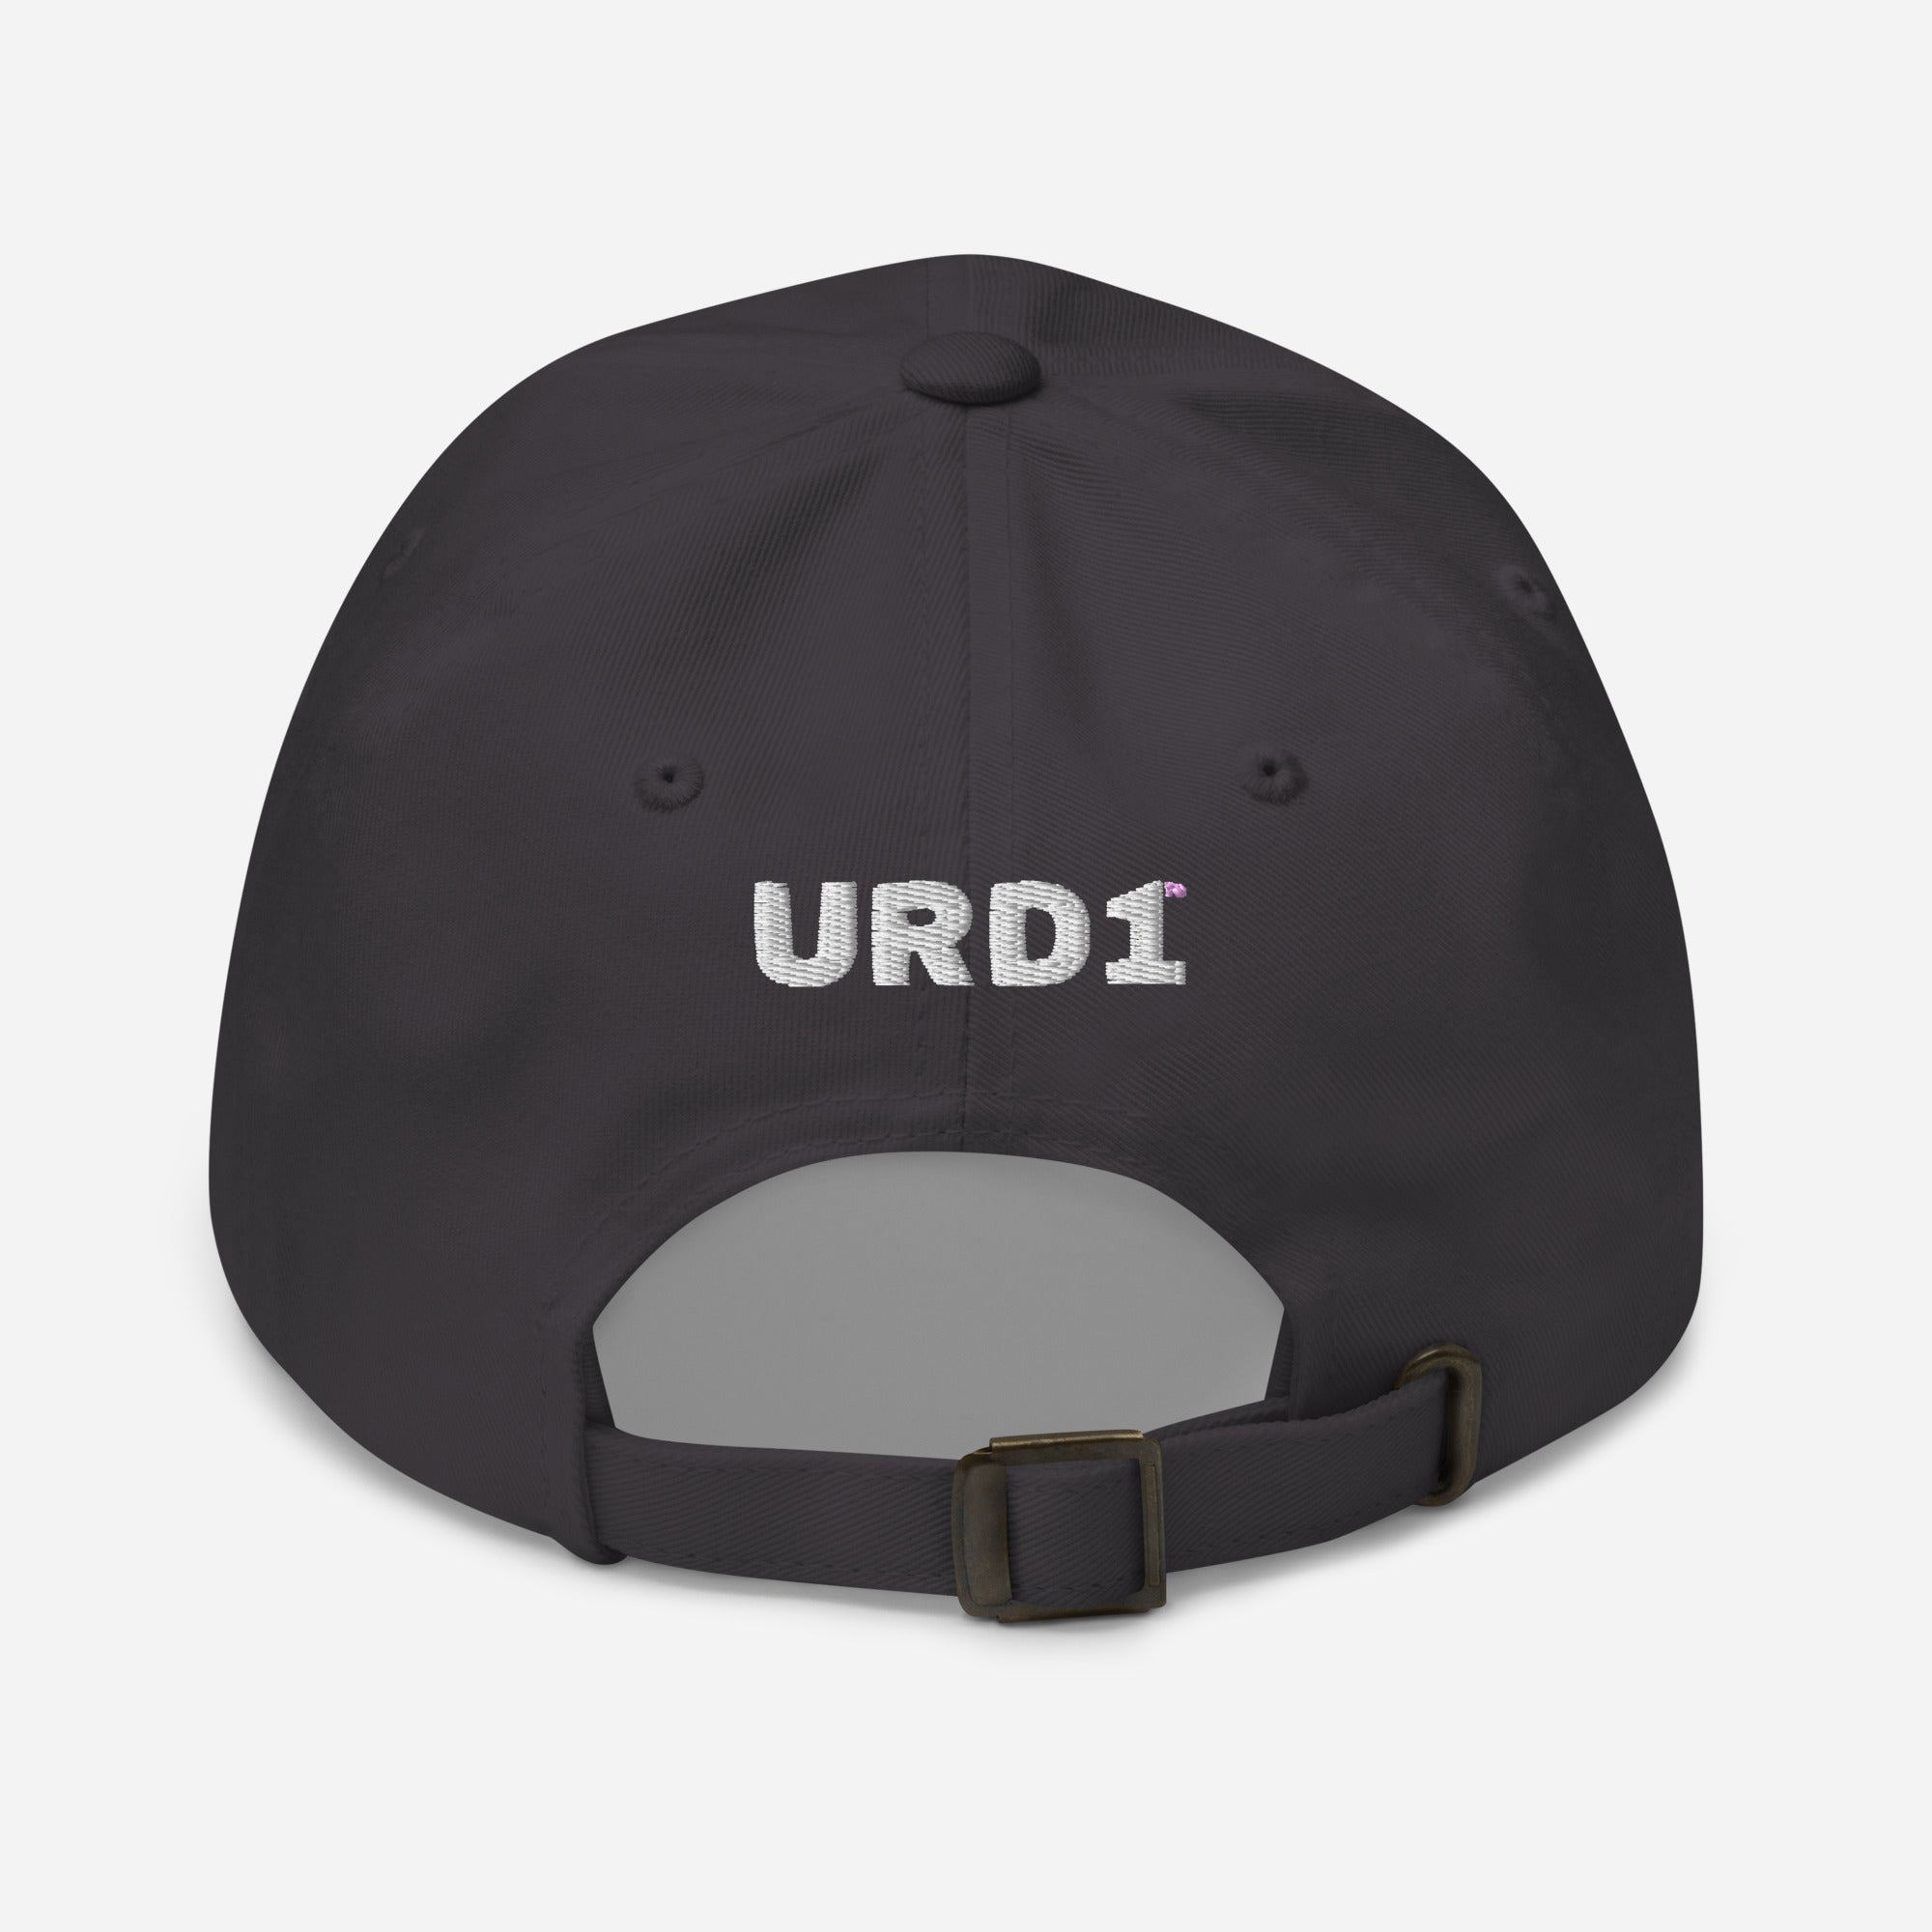 URD1 IMPACT CAP - Christian Apparel